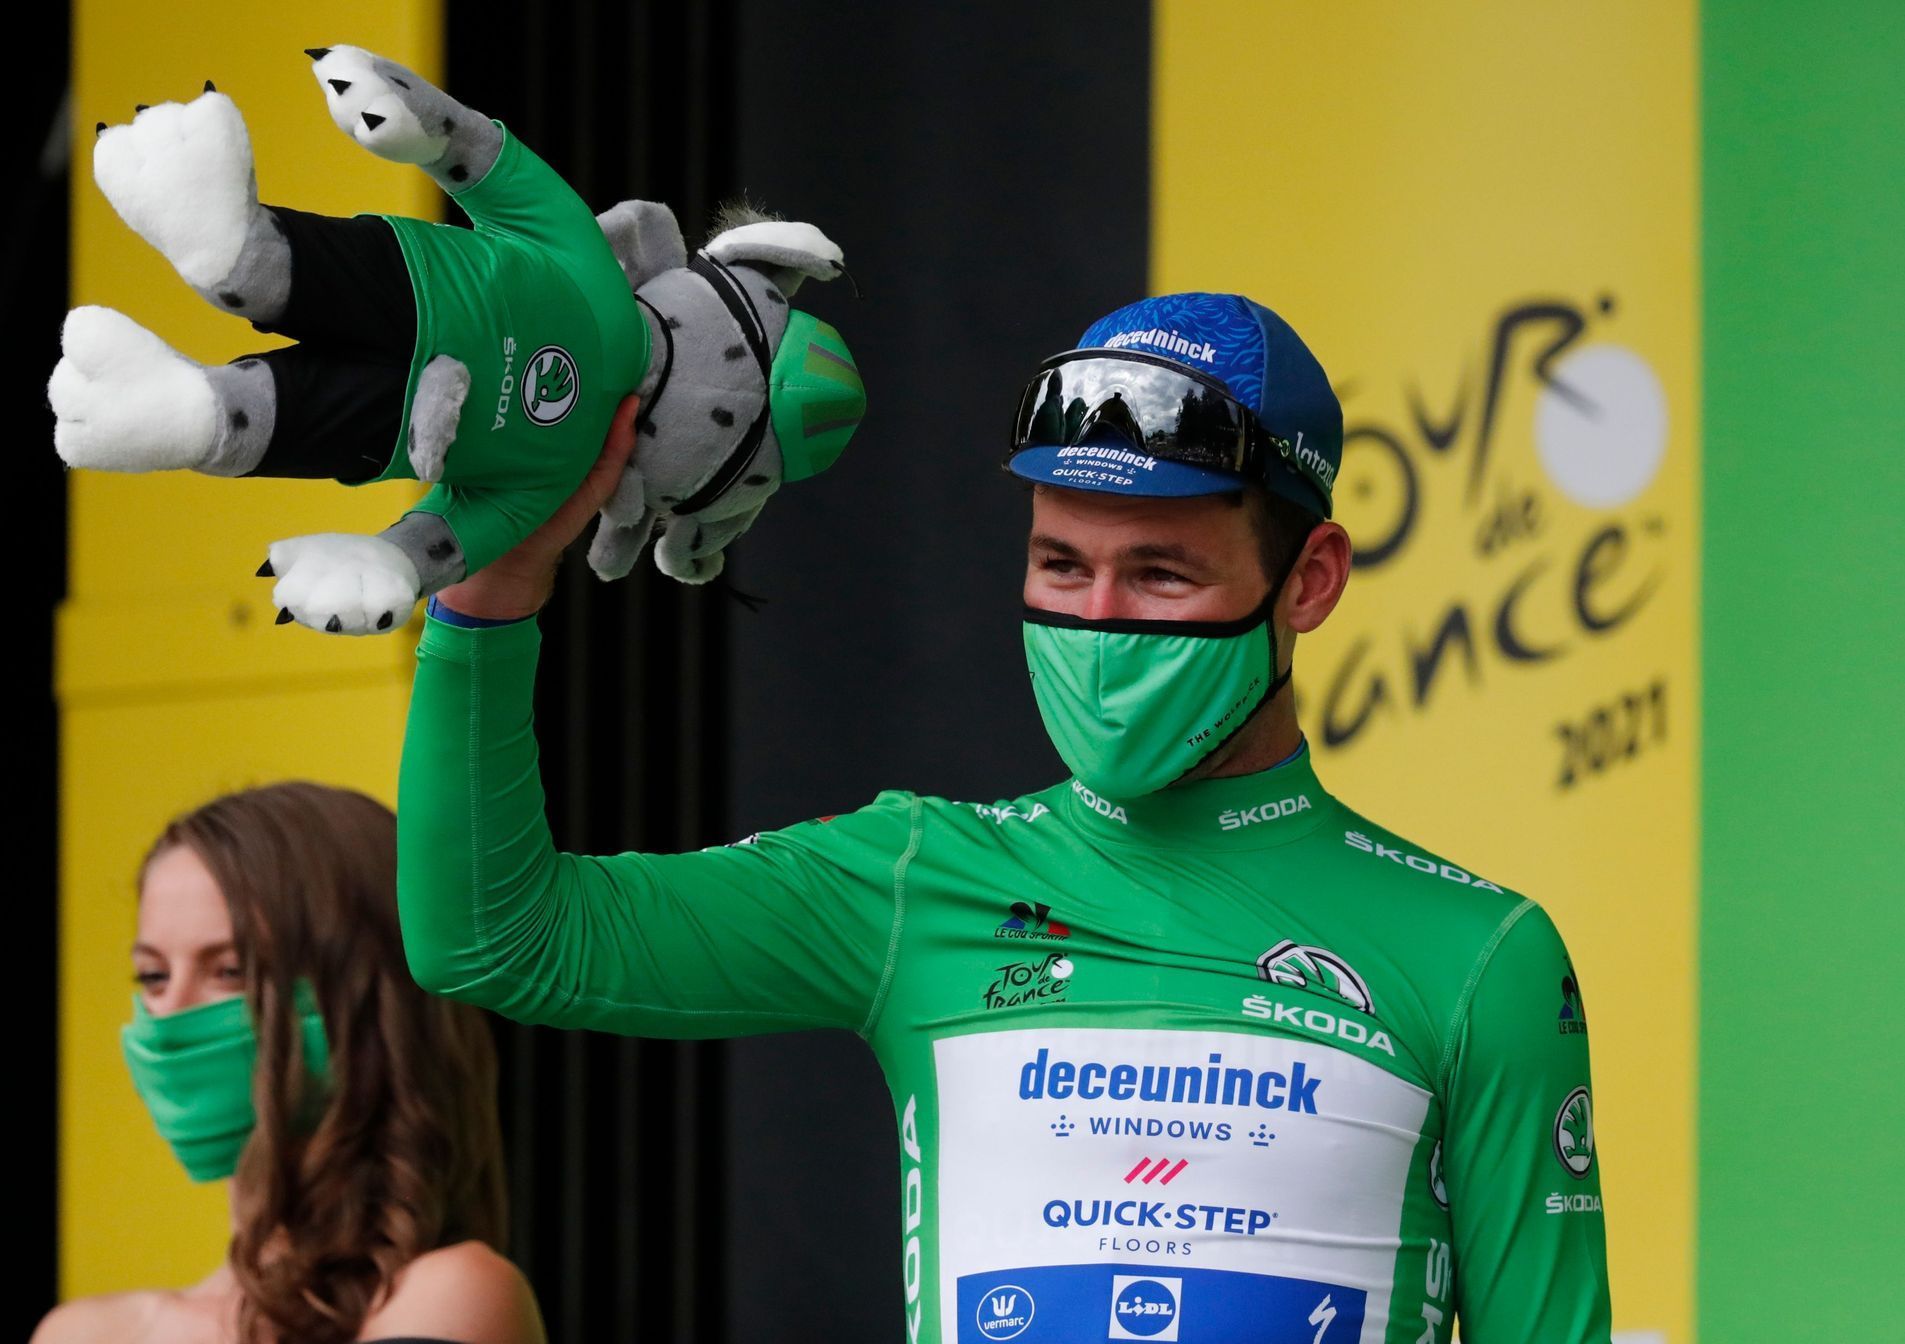 4. etapa Tour de France 2021: Mark Cavendish se převlékl do zeleného dresu